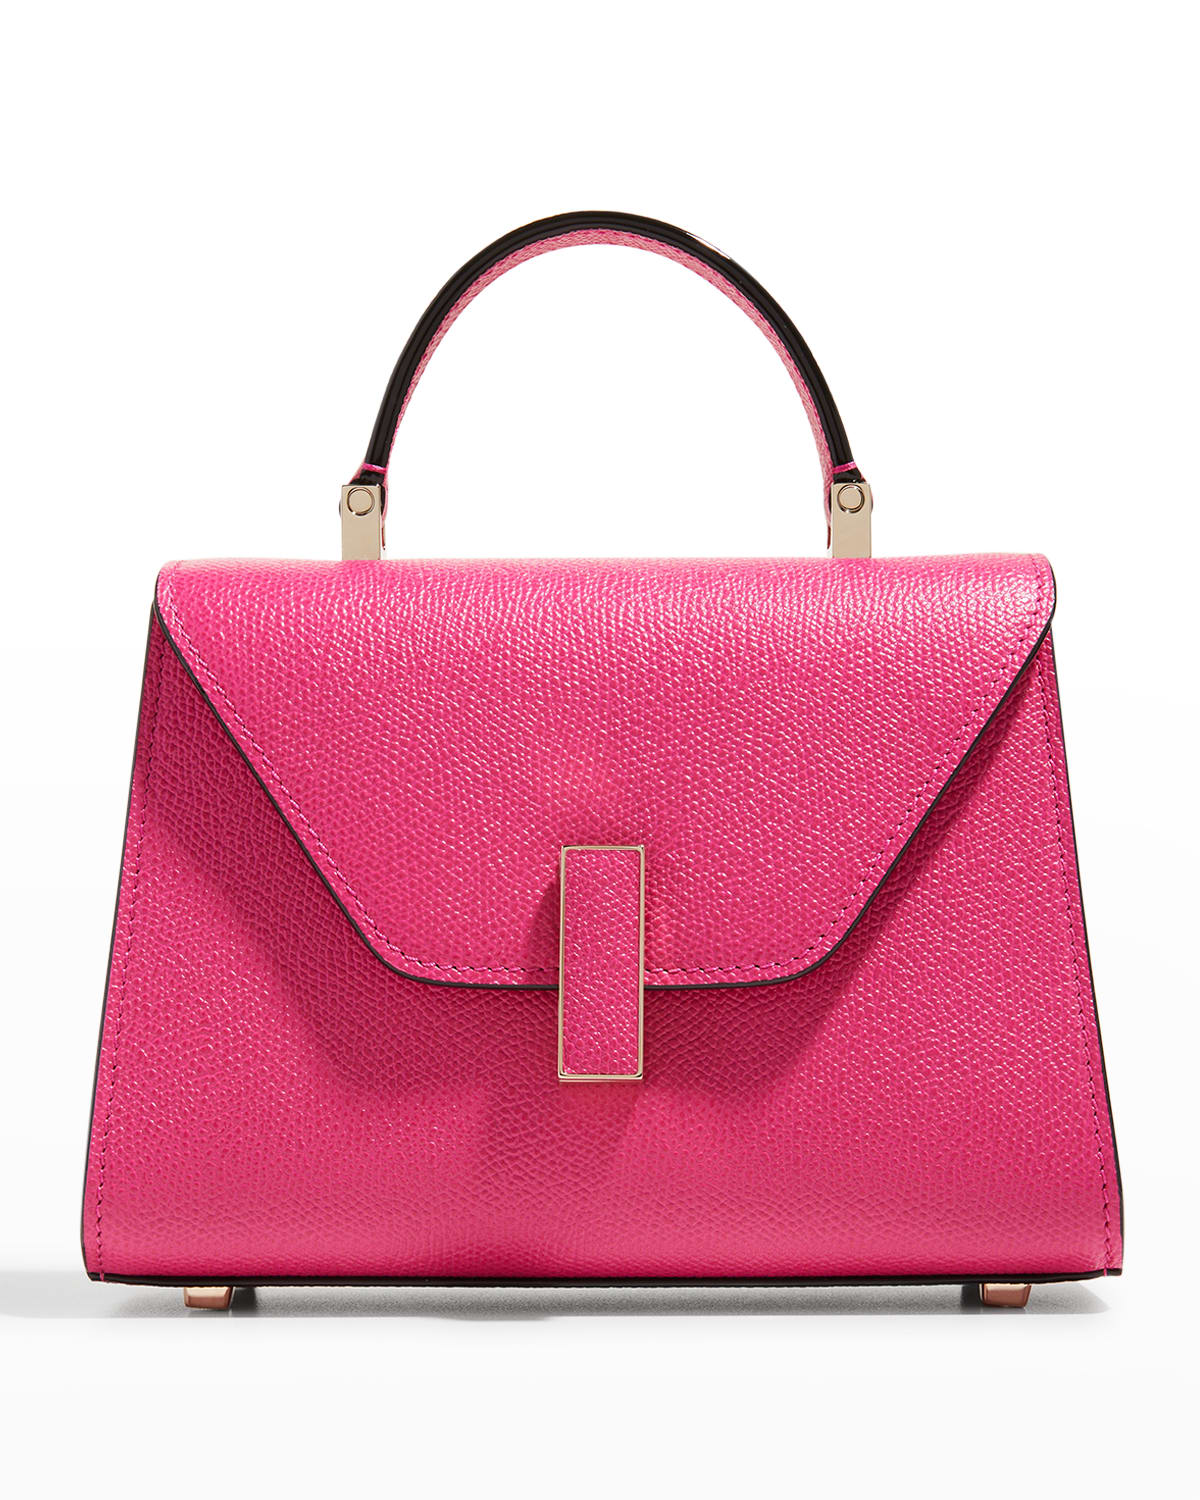 Valextra Iside Mini Leather Satchel Bag | Neiman Marcus